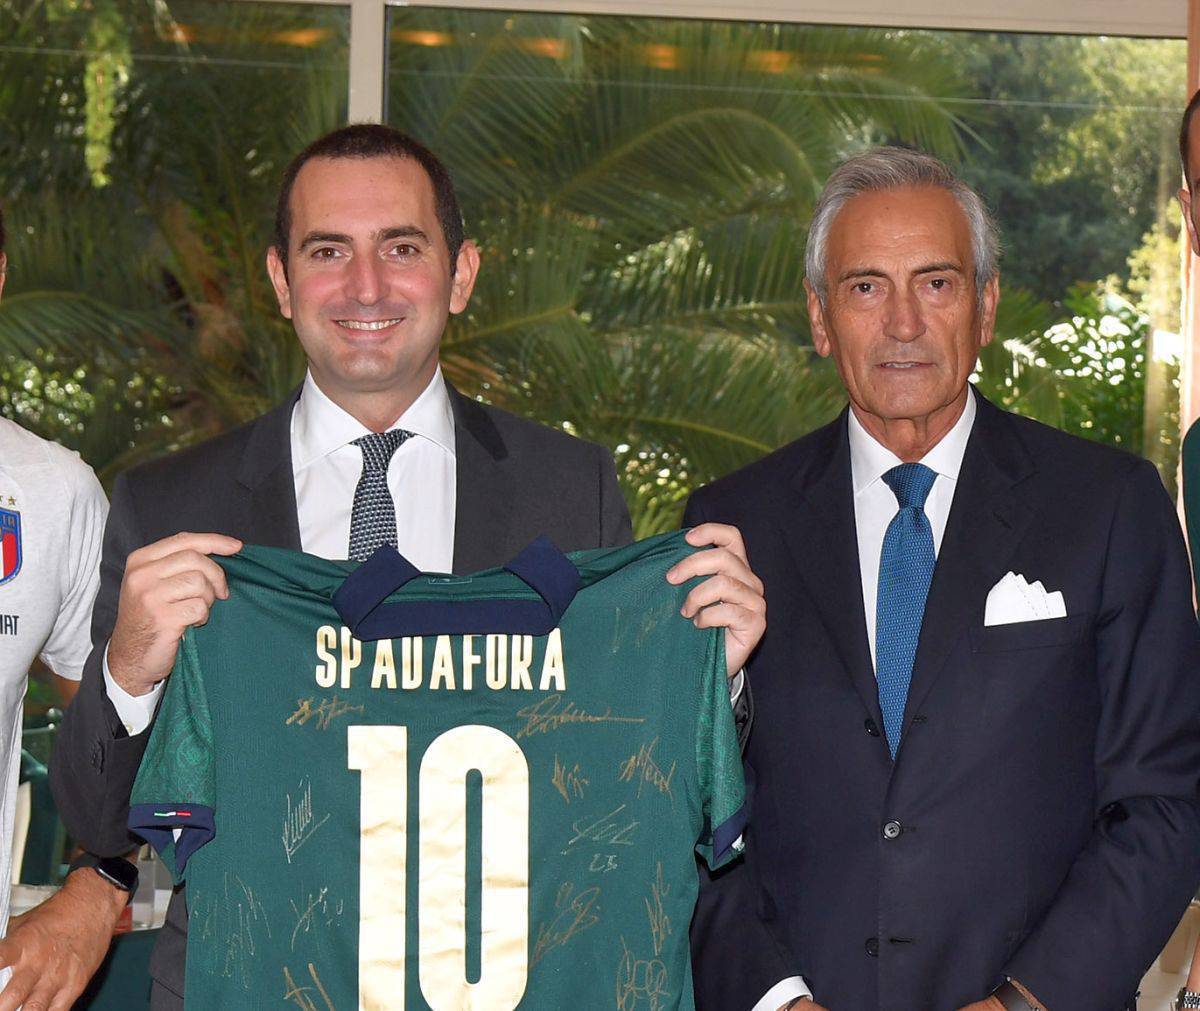 Serie A, Spadafora avverte: "I calciatori sono preoccupati"